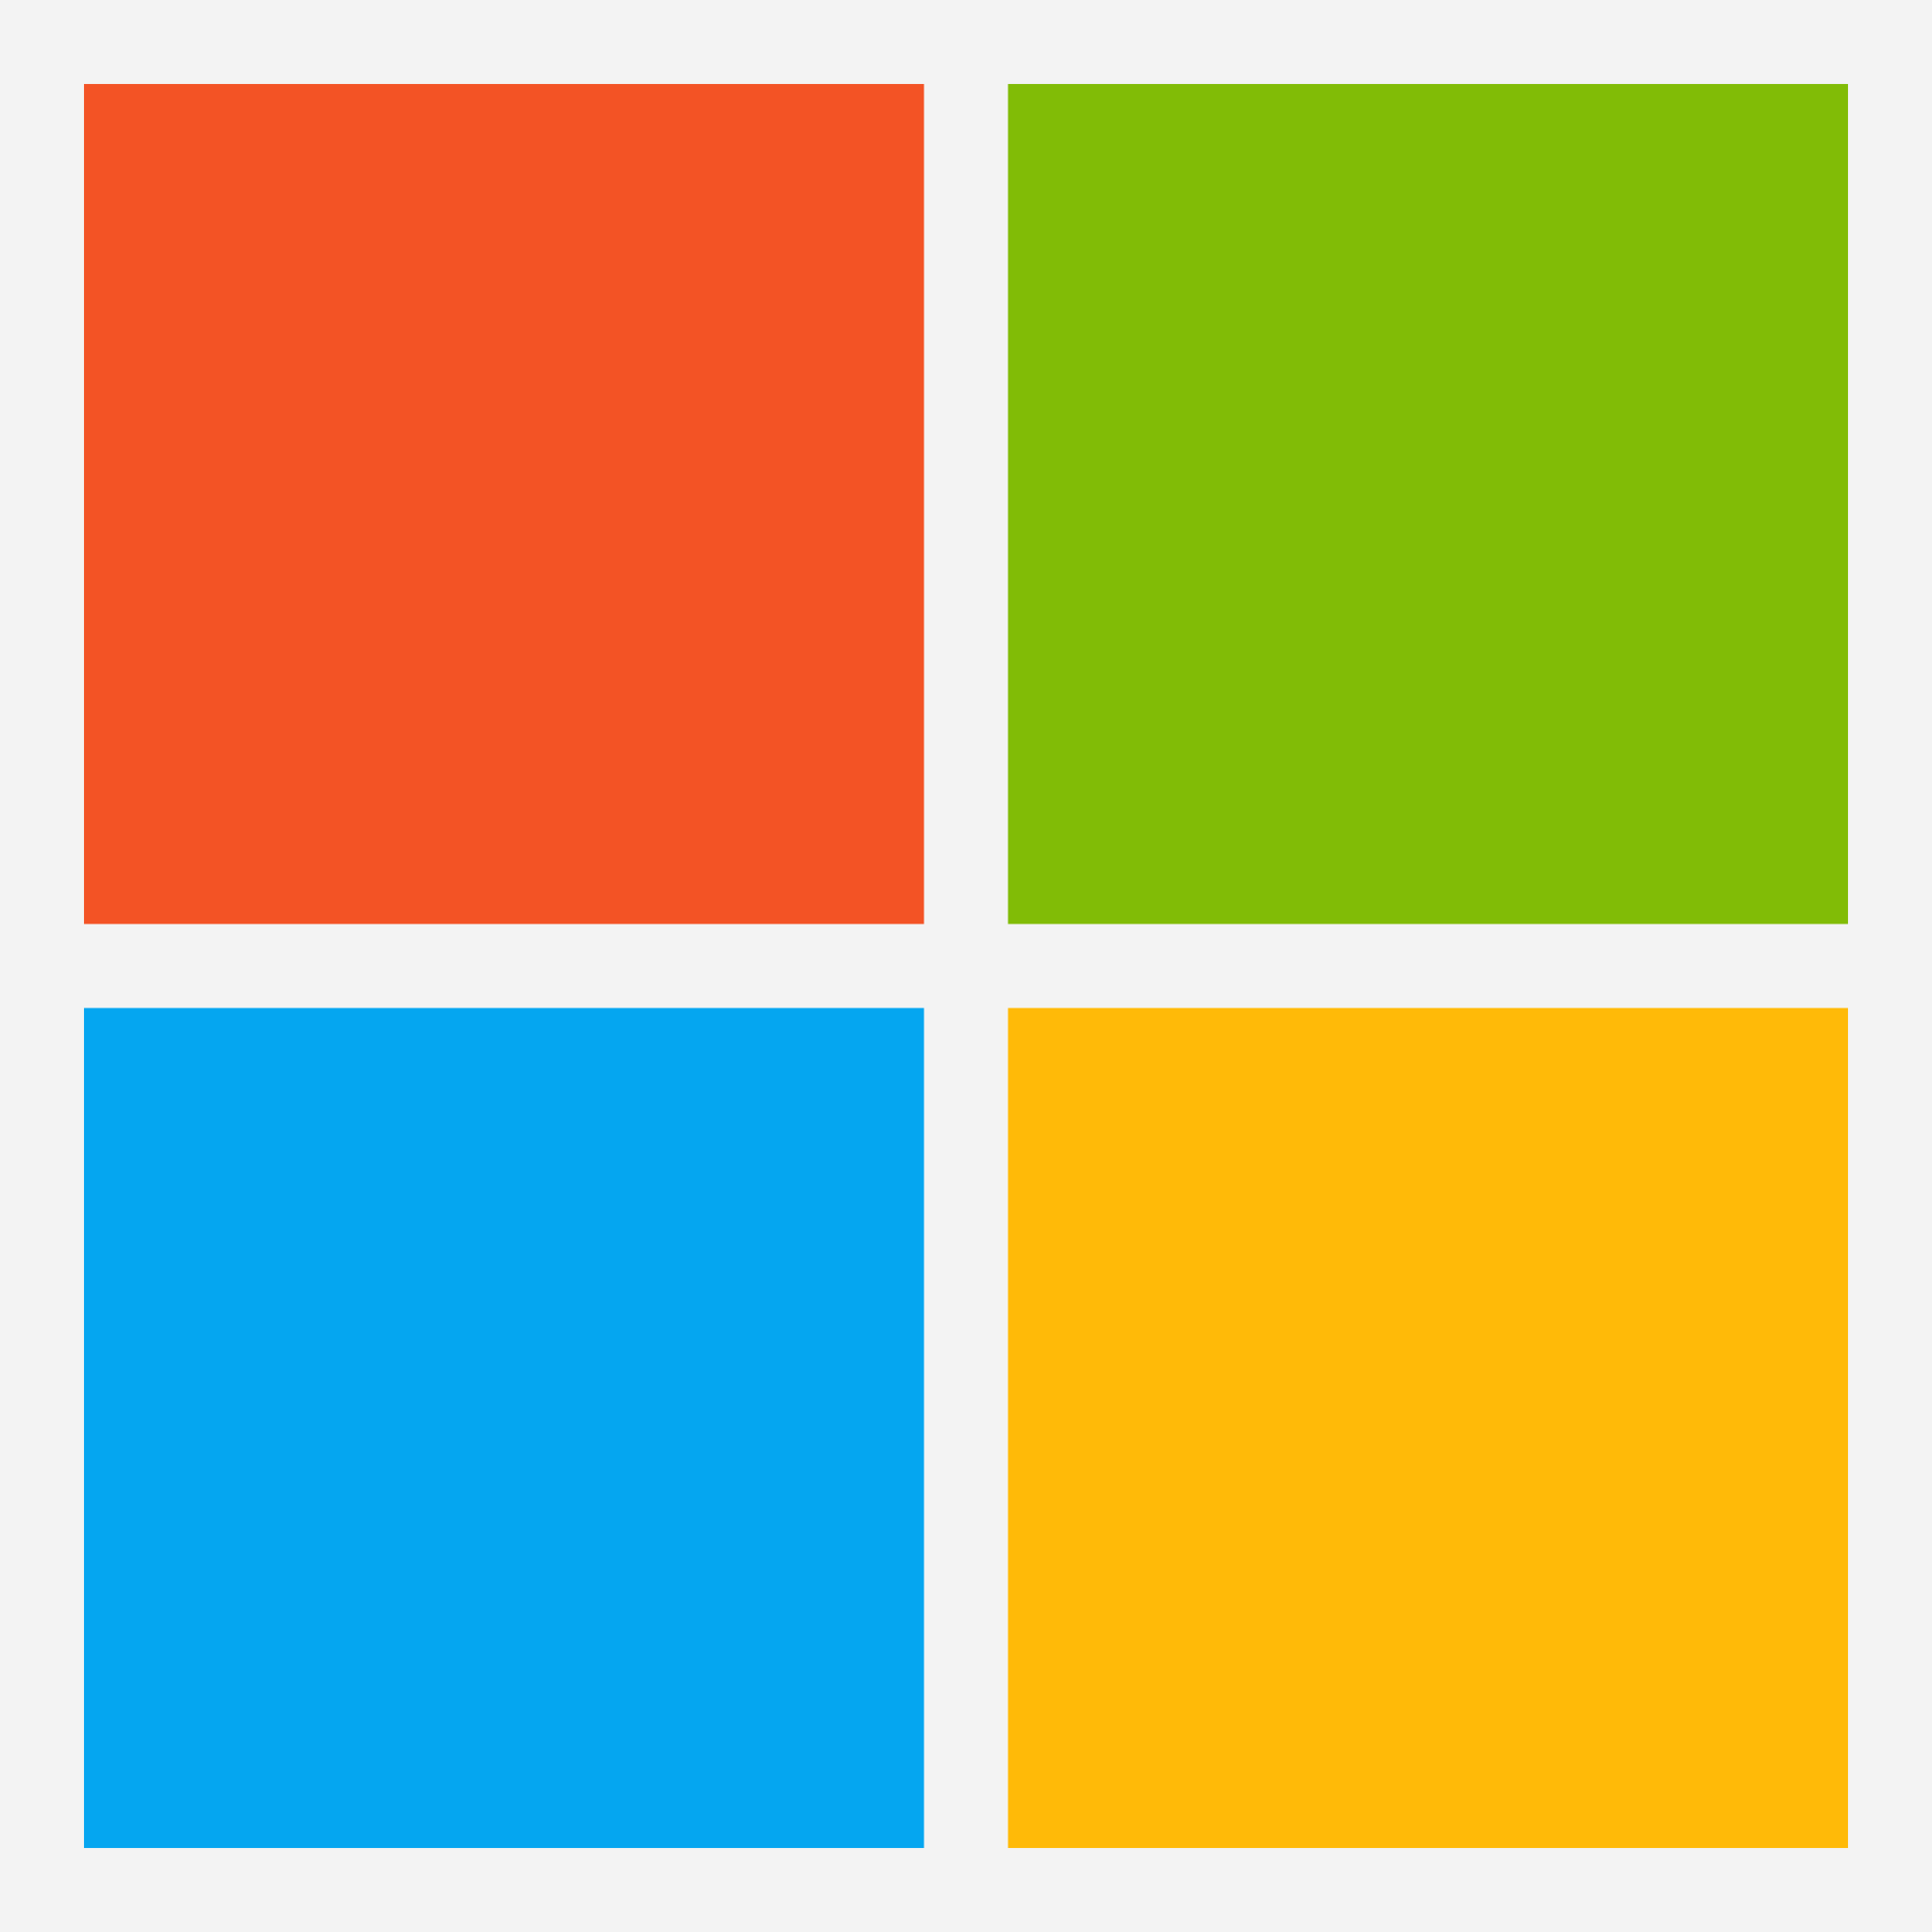 Microsoft_logo.svg